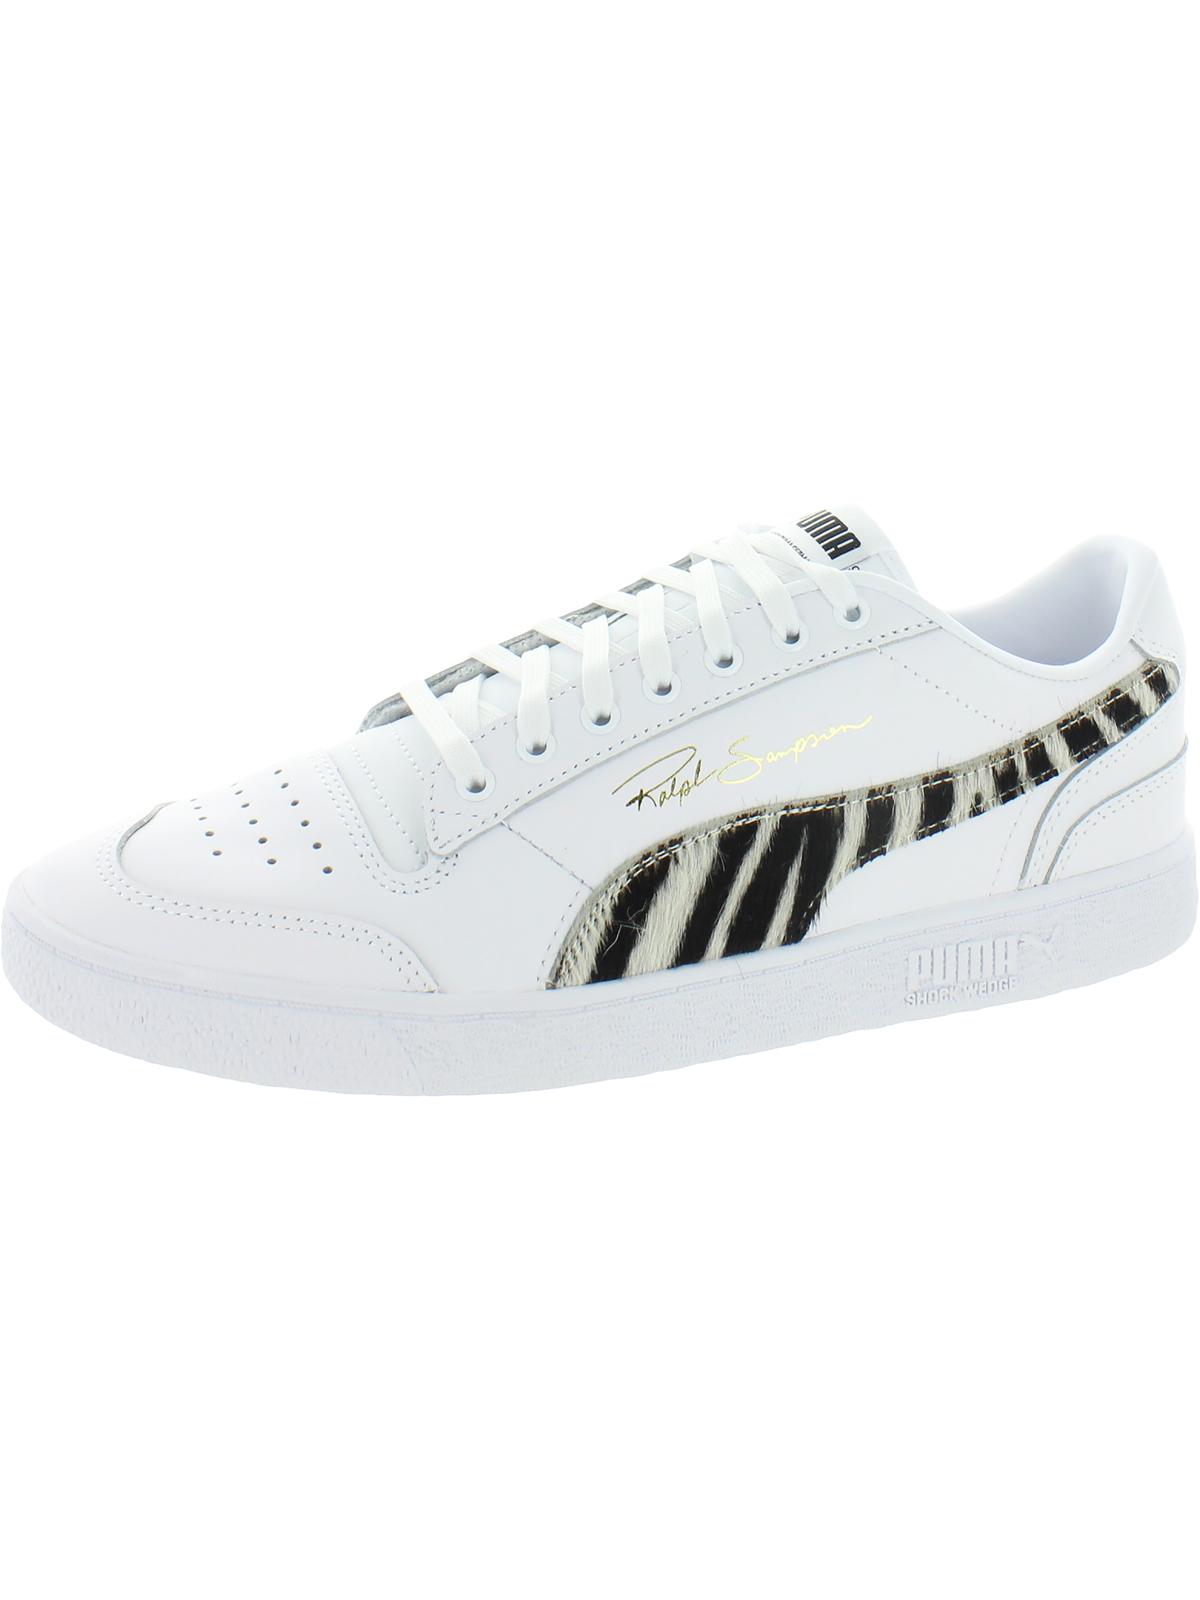 Puma Mens Ralph Sampson Lo Wild Calf Hair Fashion Sneakers White 8 Medium (D) - image 1 of 3